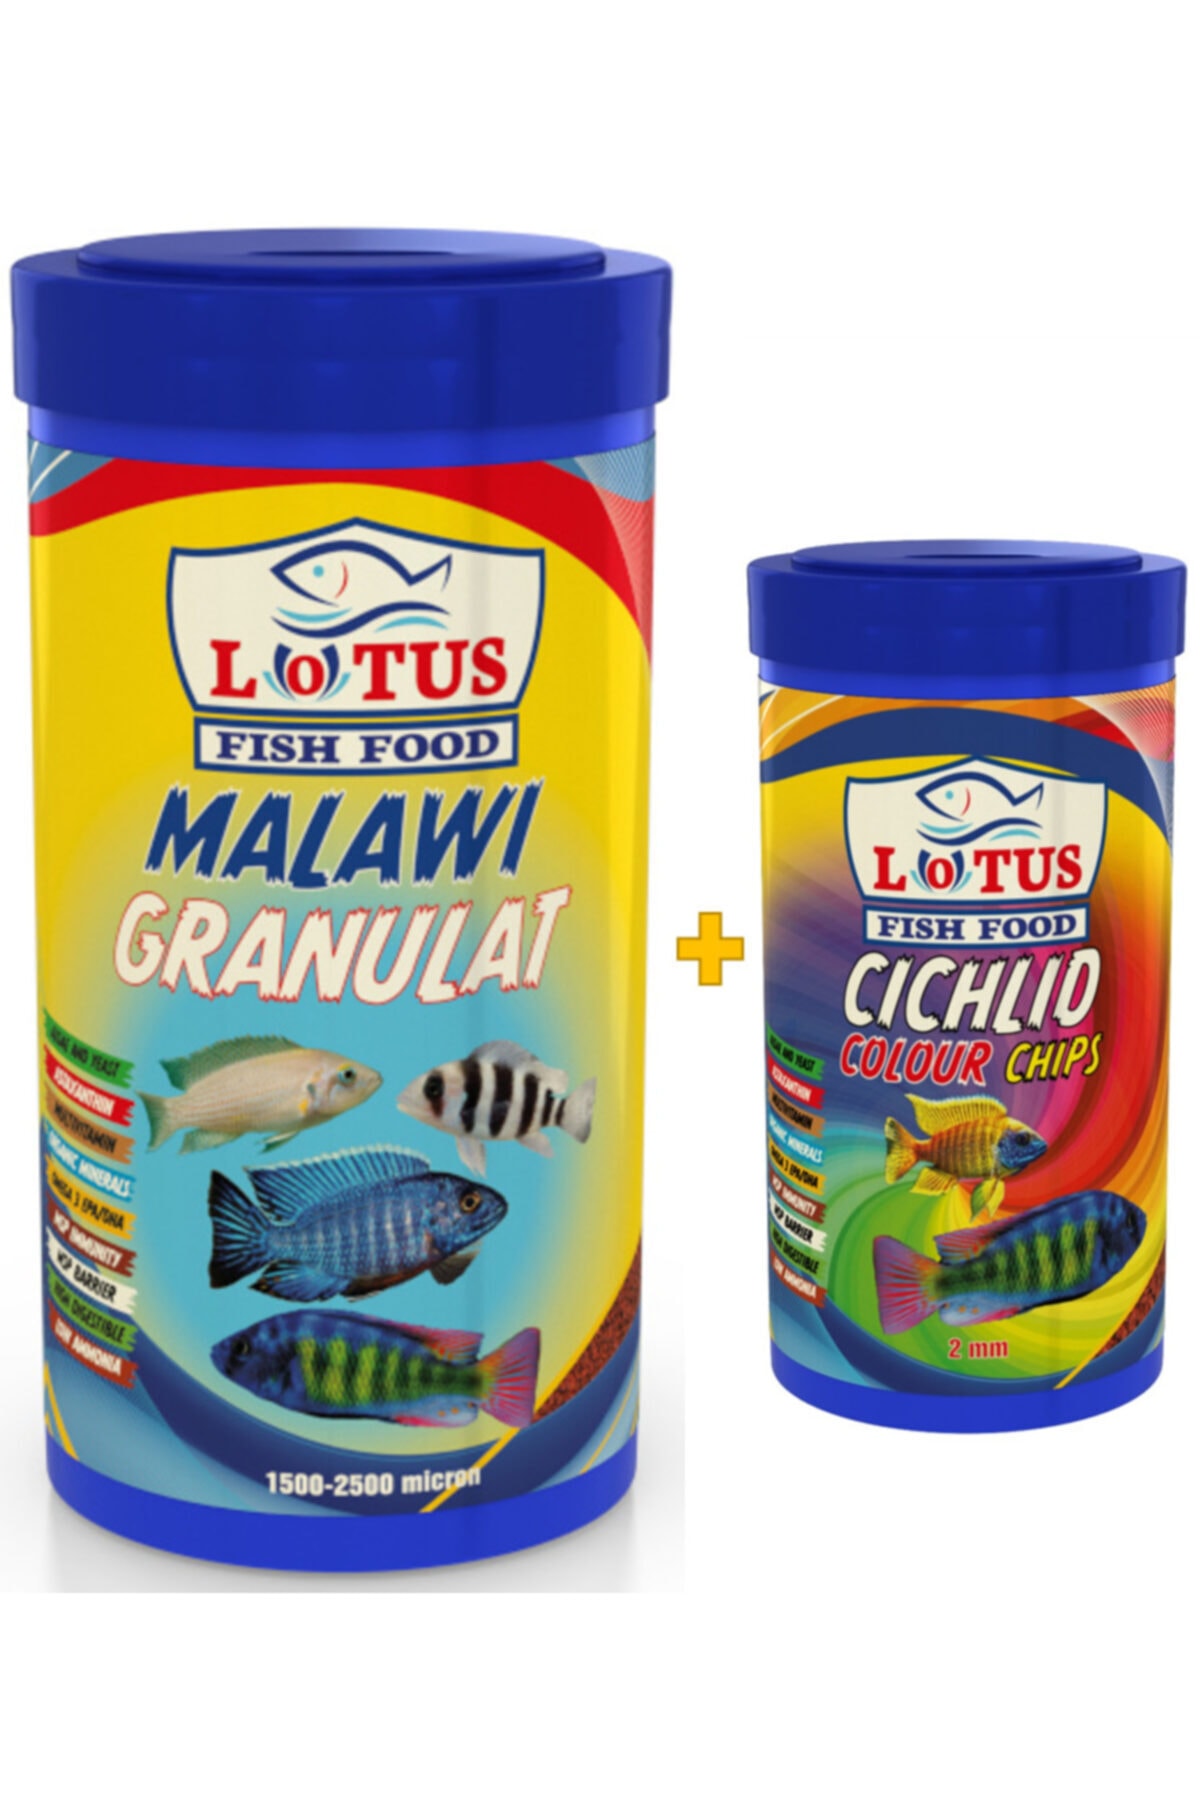 Lotus Malawi Granulat 1000 Ml Ve Cichlid Colour Chips 100 Ml Balık Yemi